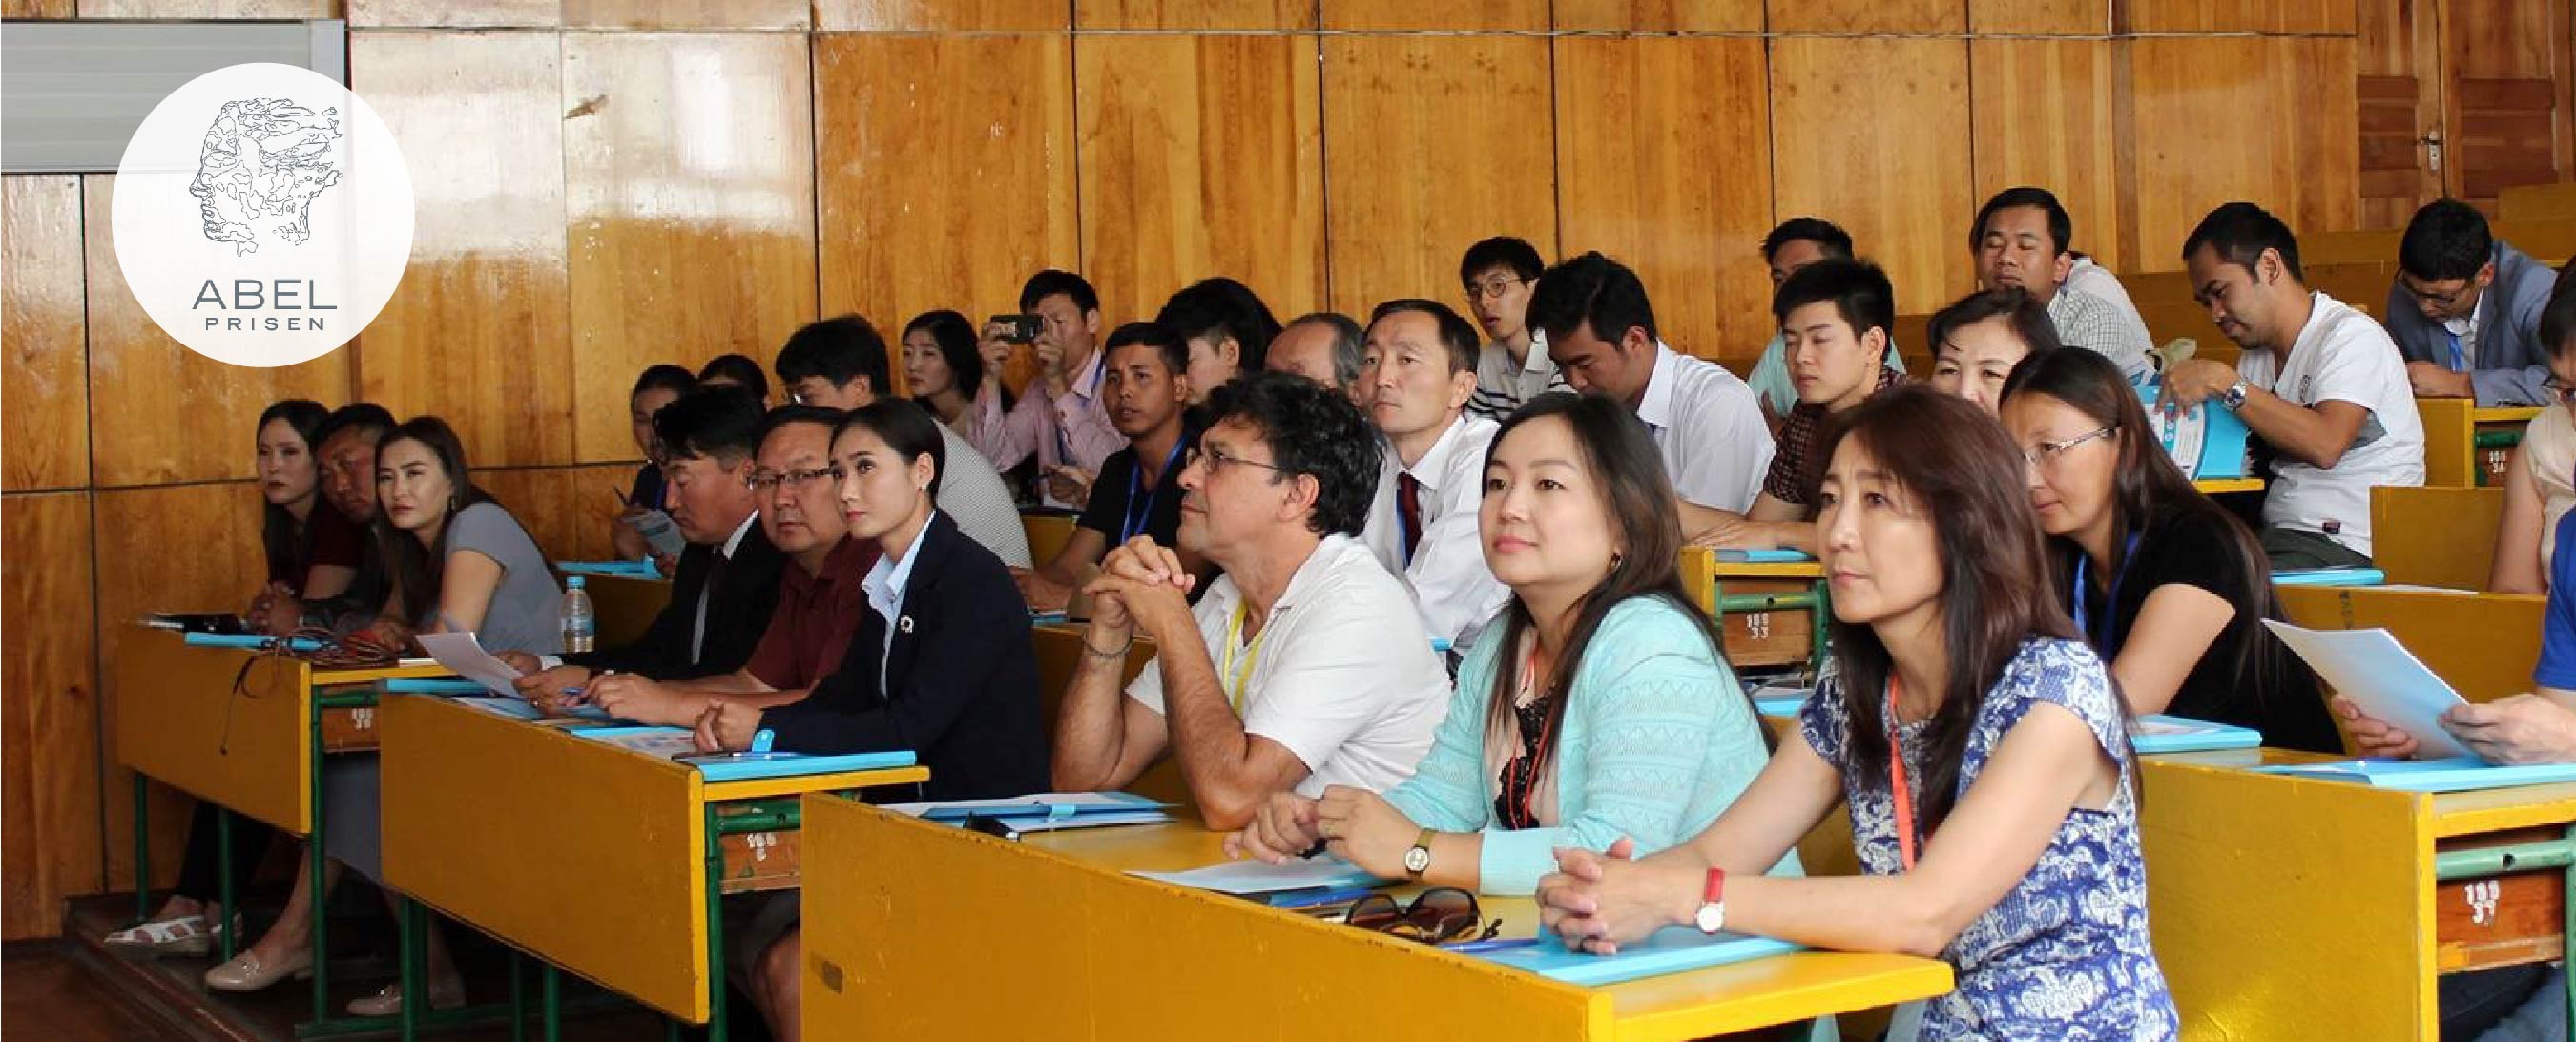 Conference participants attending a lecture.